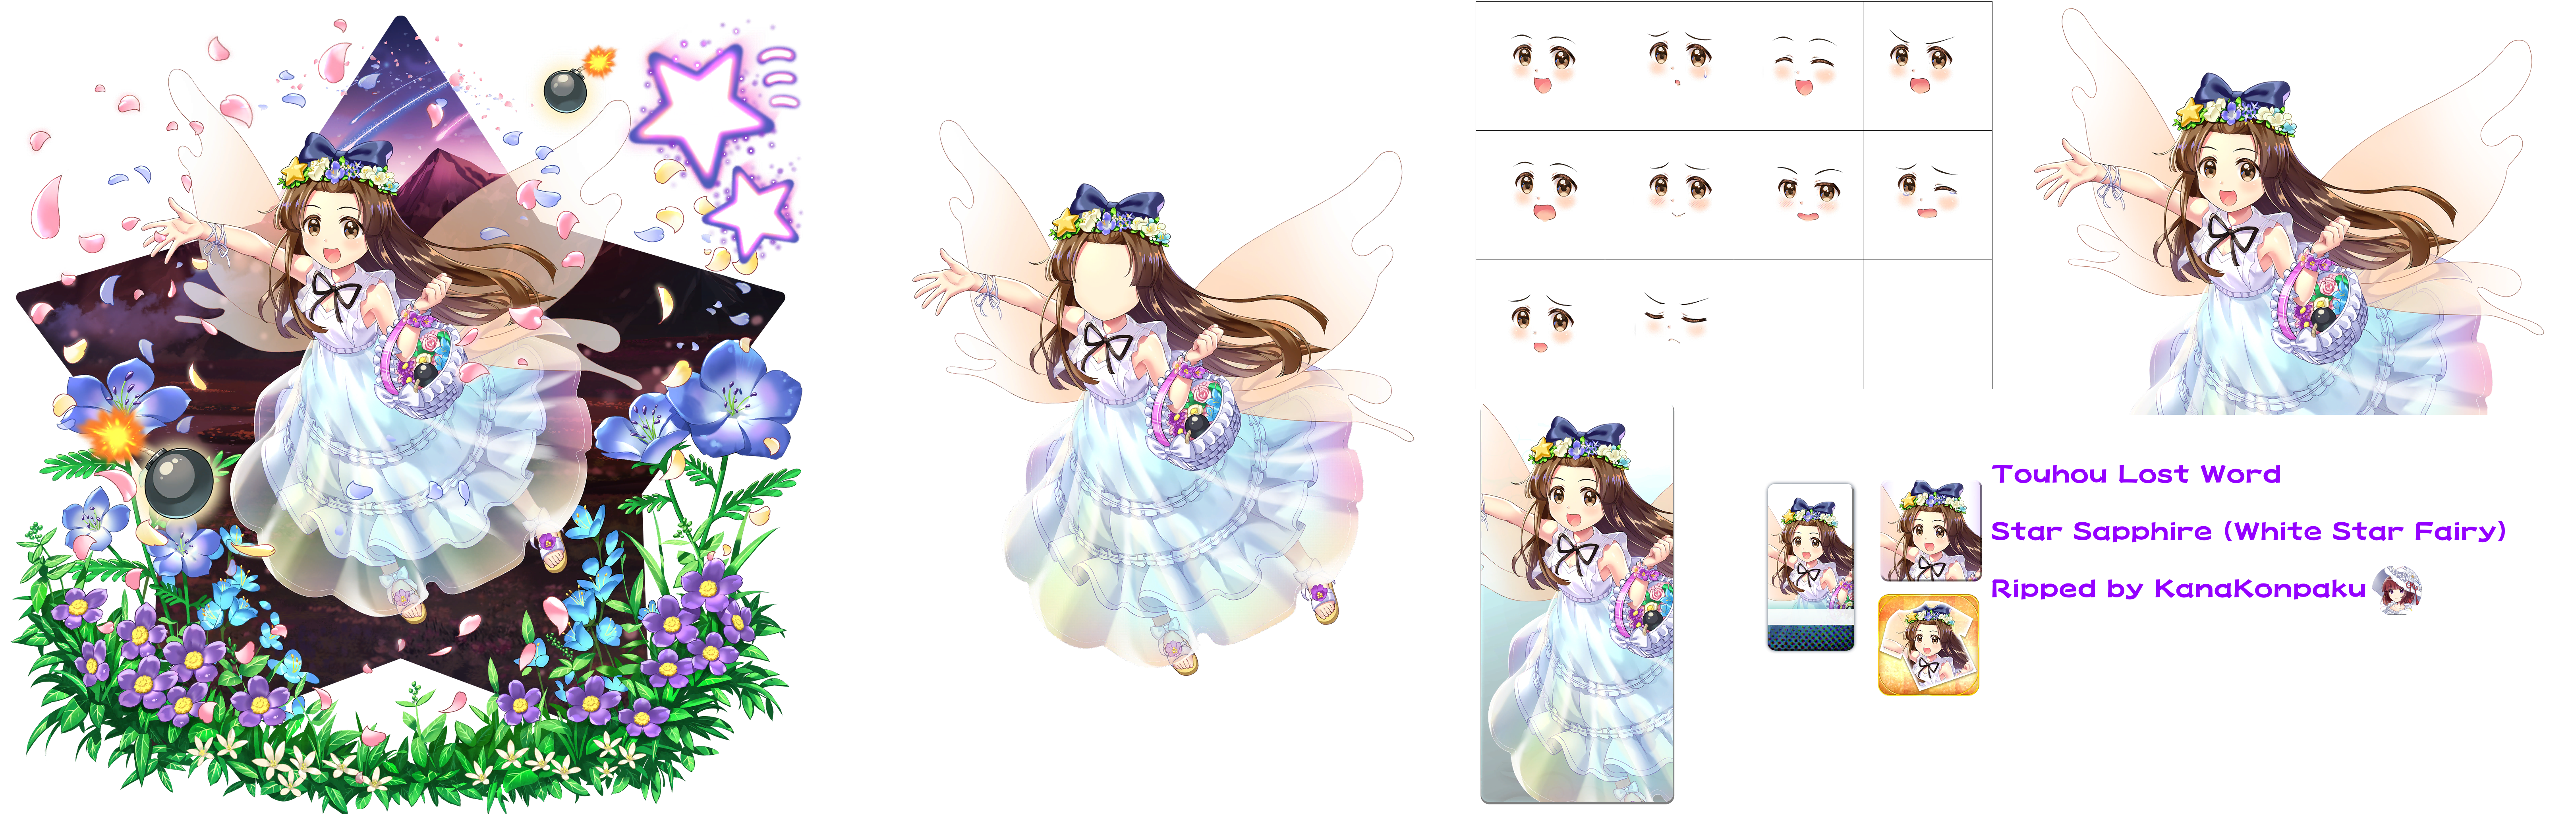 Star Sapphire (White Star Fairy)